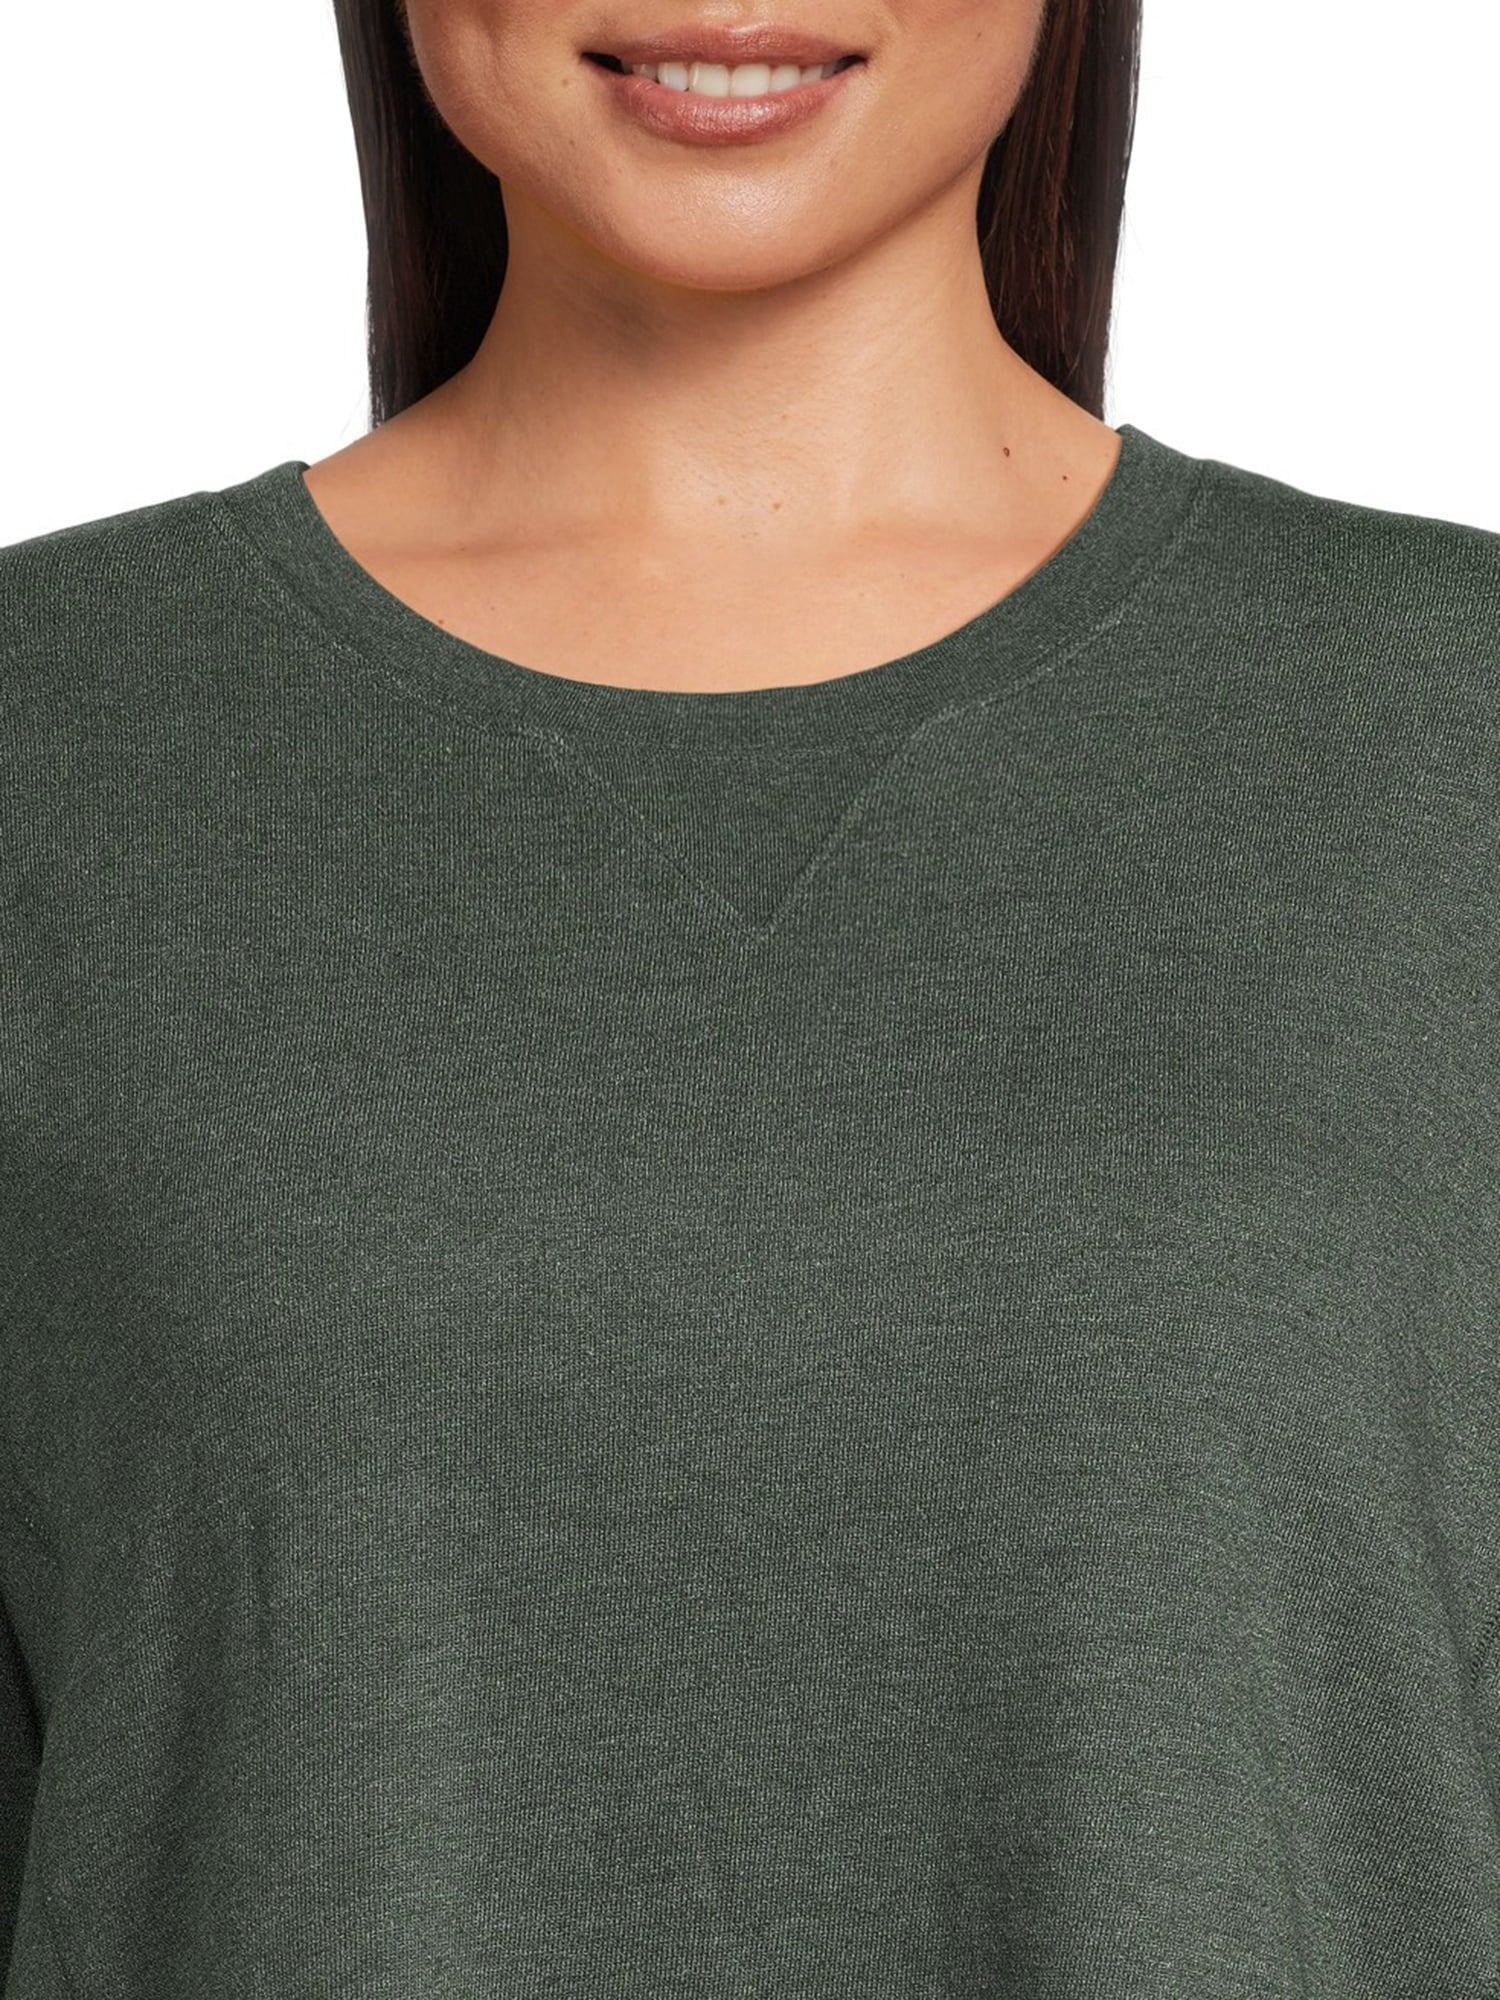 Terra & Sky Women's Plus High-Low French Terrycloth Sweatshirt - image 4 of 5